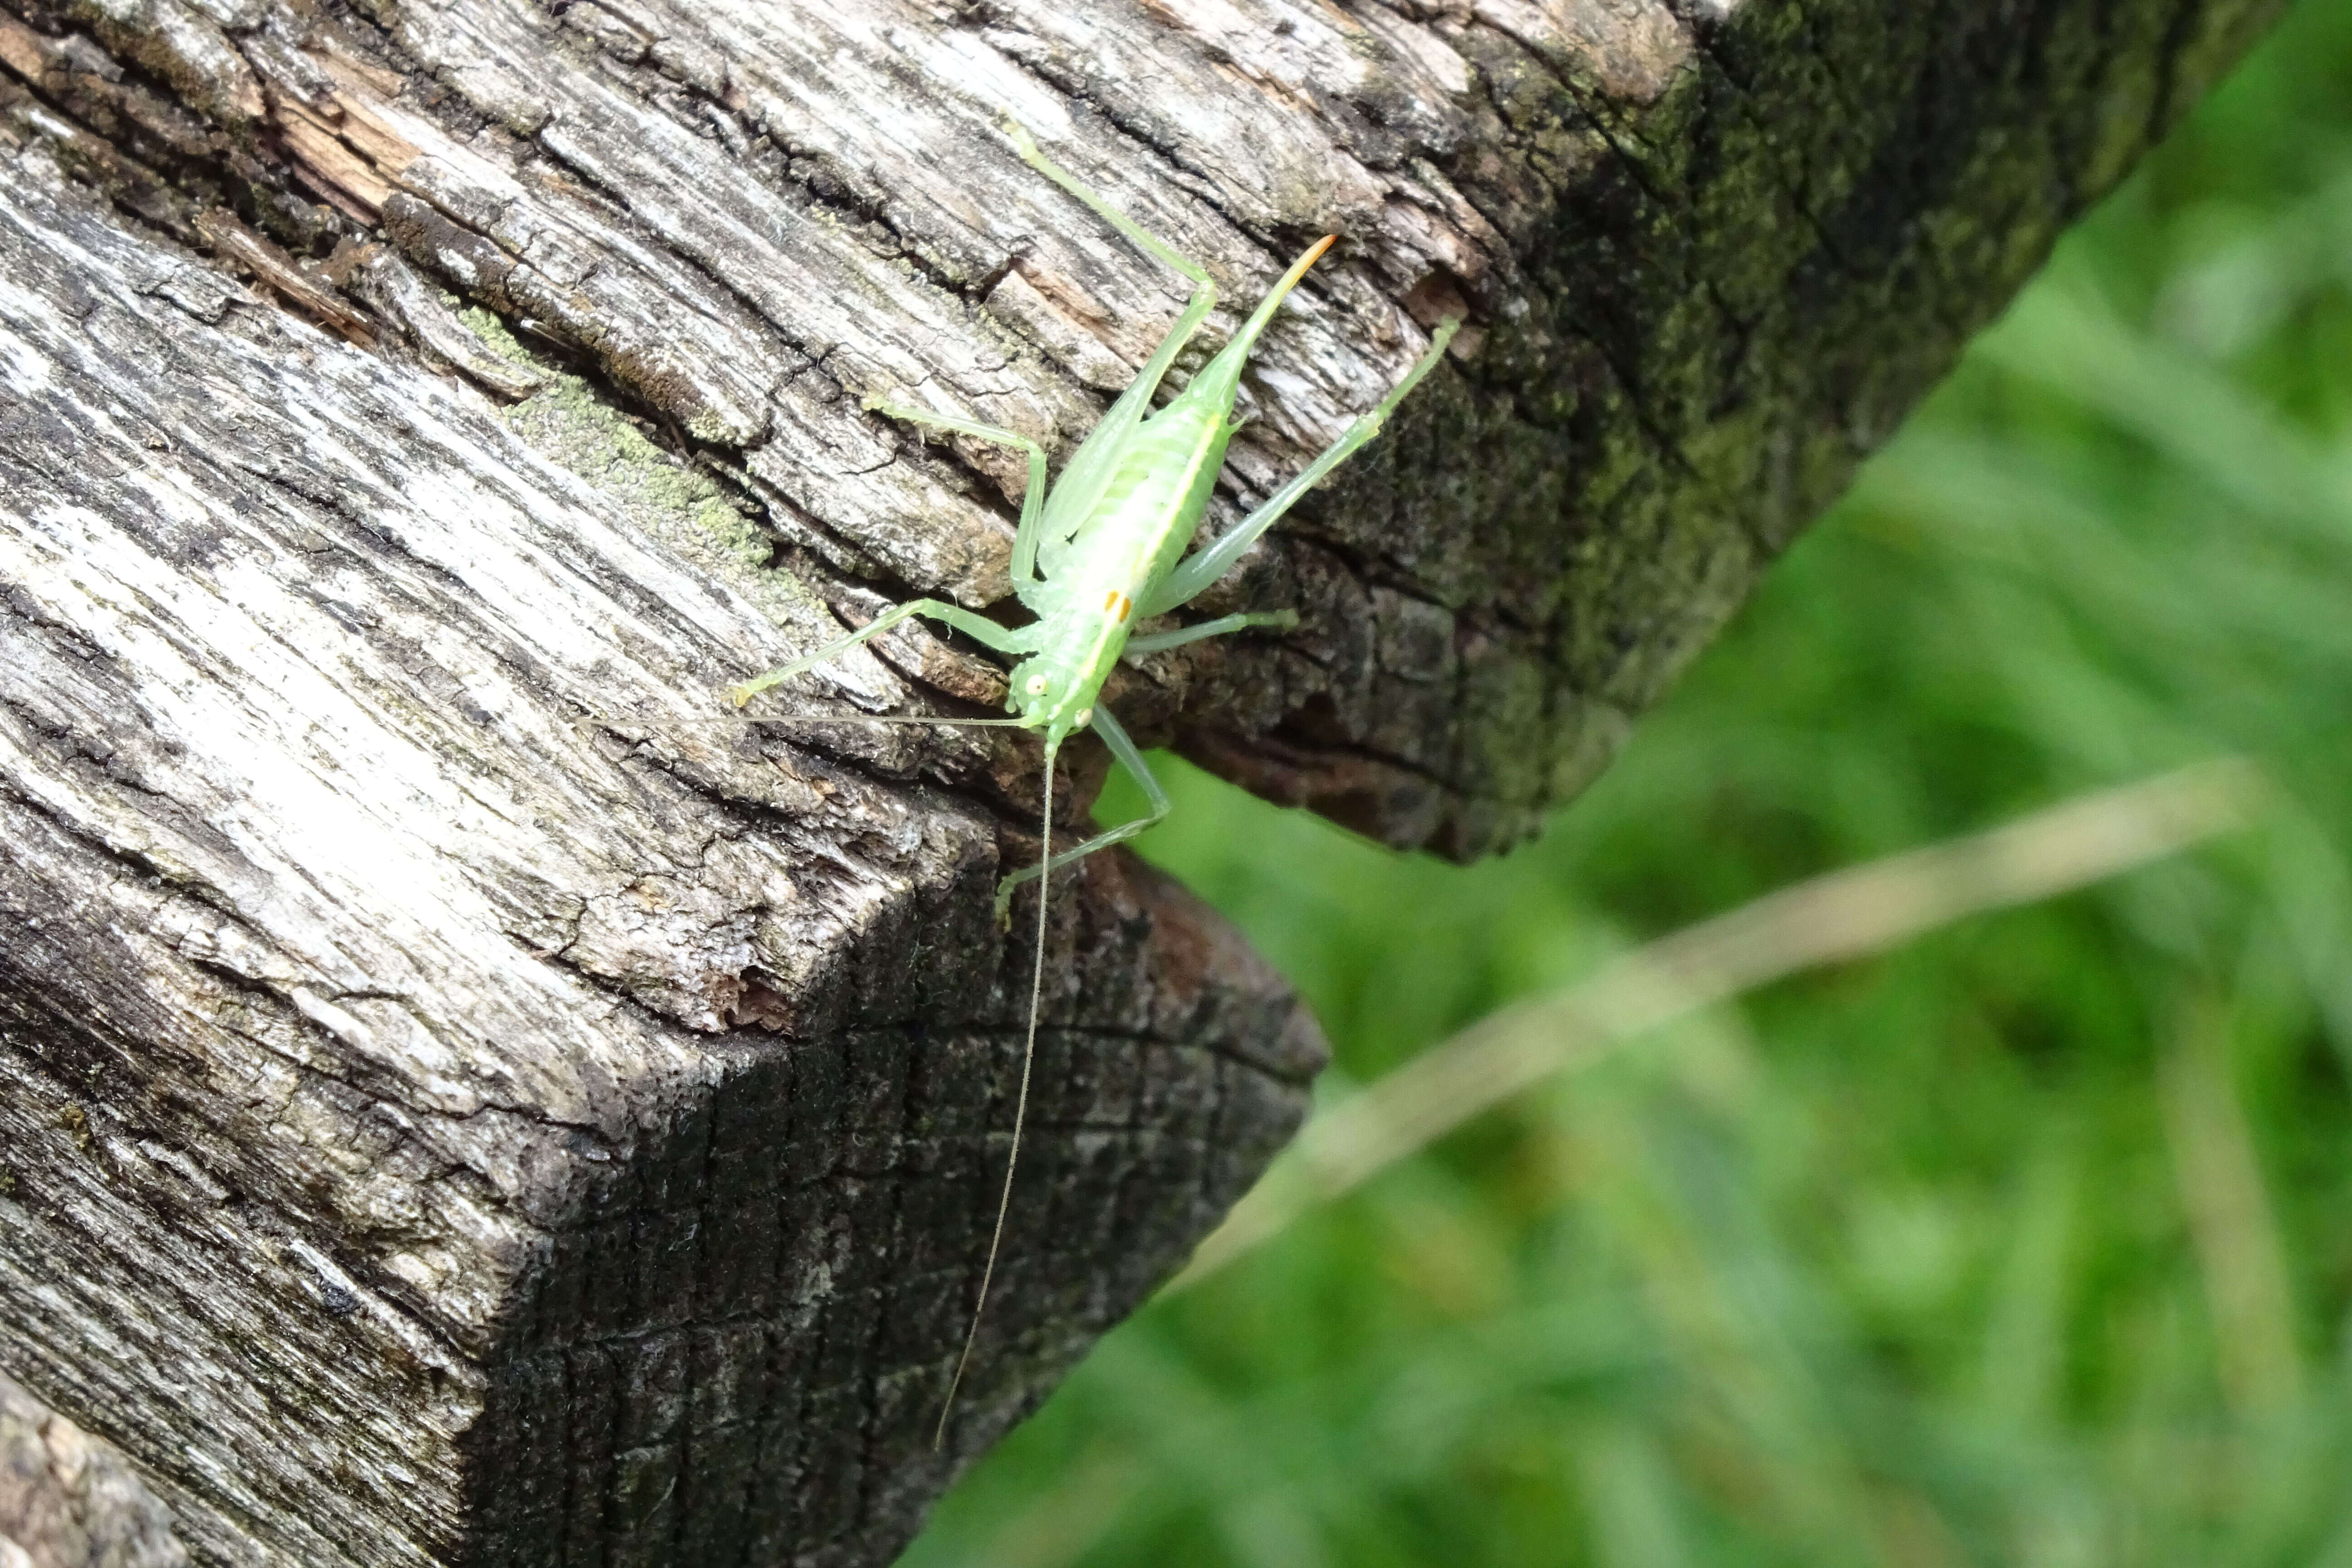 Image of southern oak bush-cricket